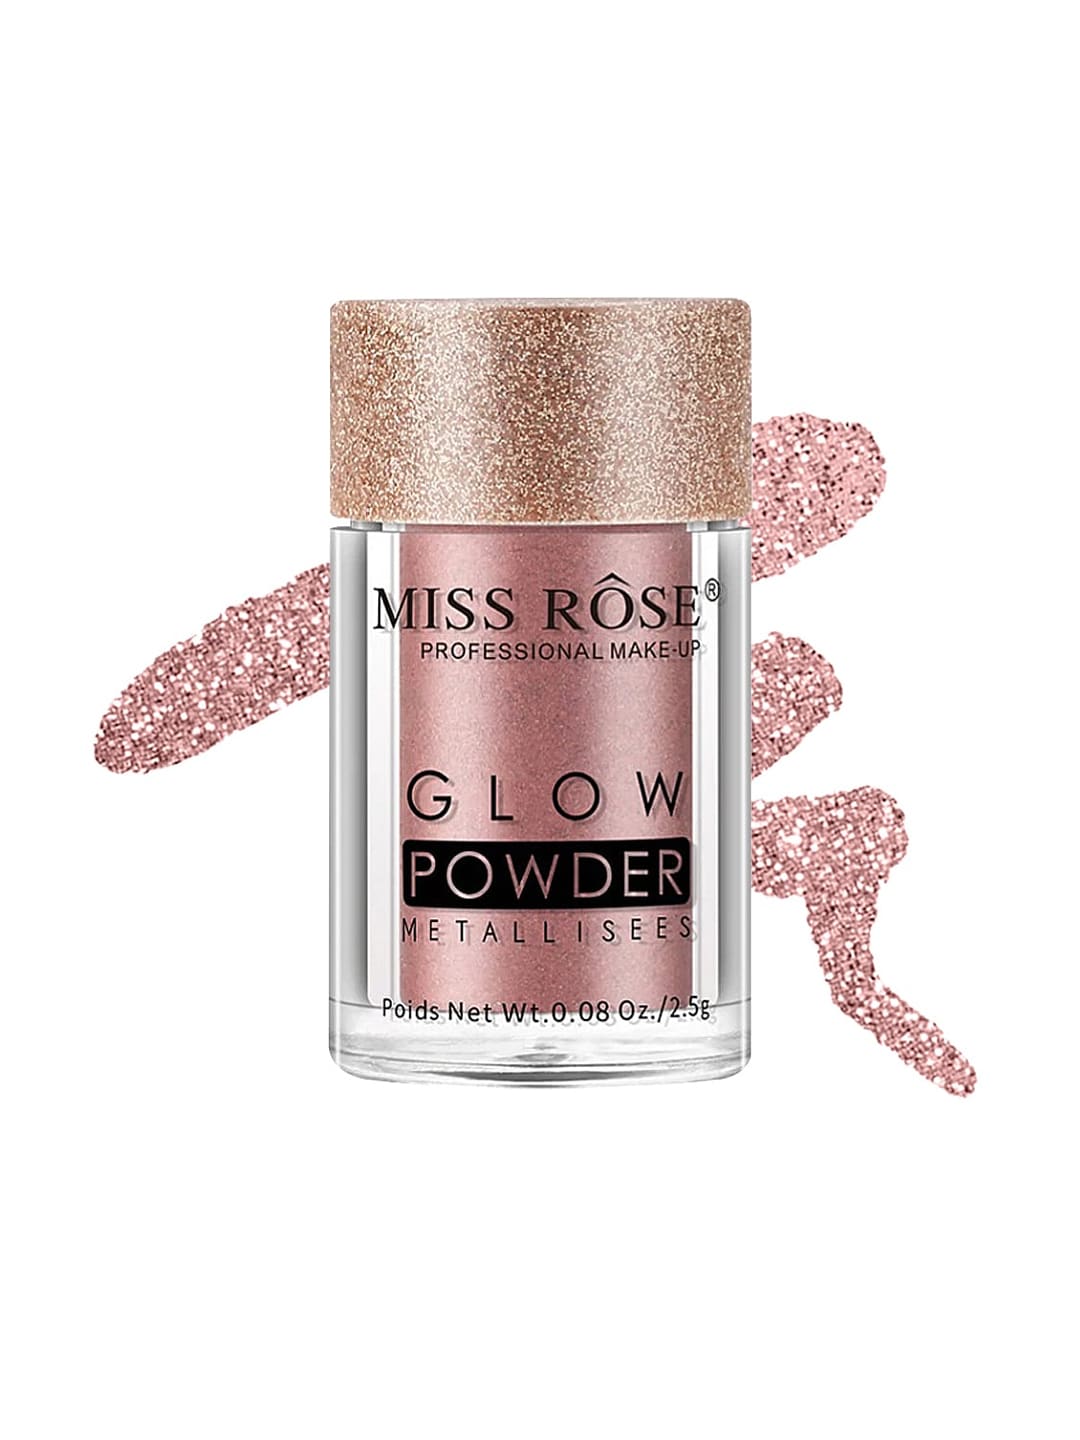 MISS ROSE Single Eyeshadow Glow Powder - Metalises 7001-010M 08 Price in India